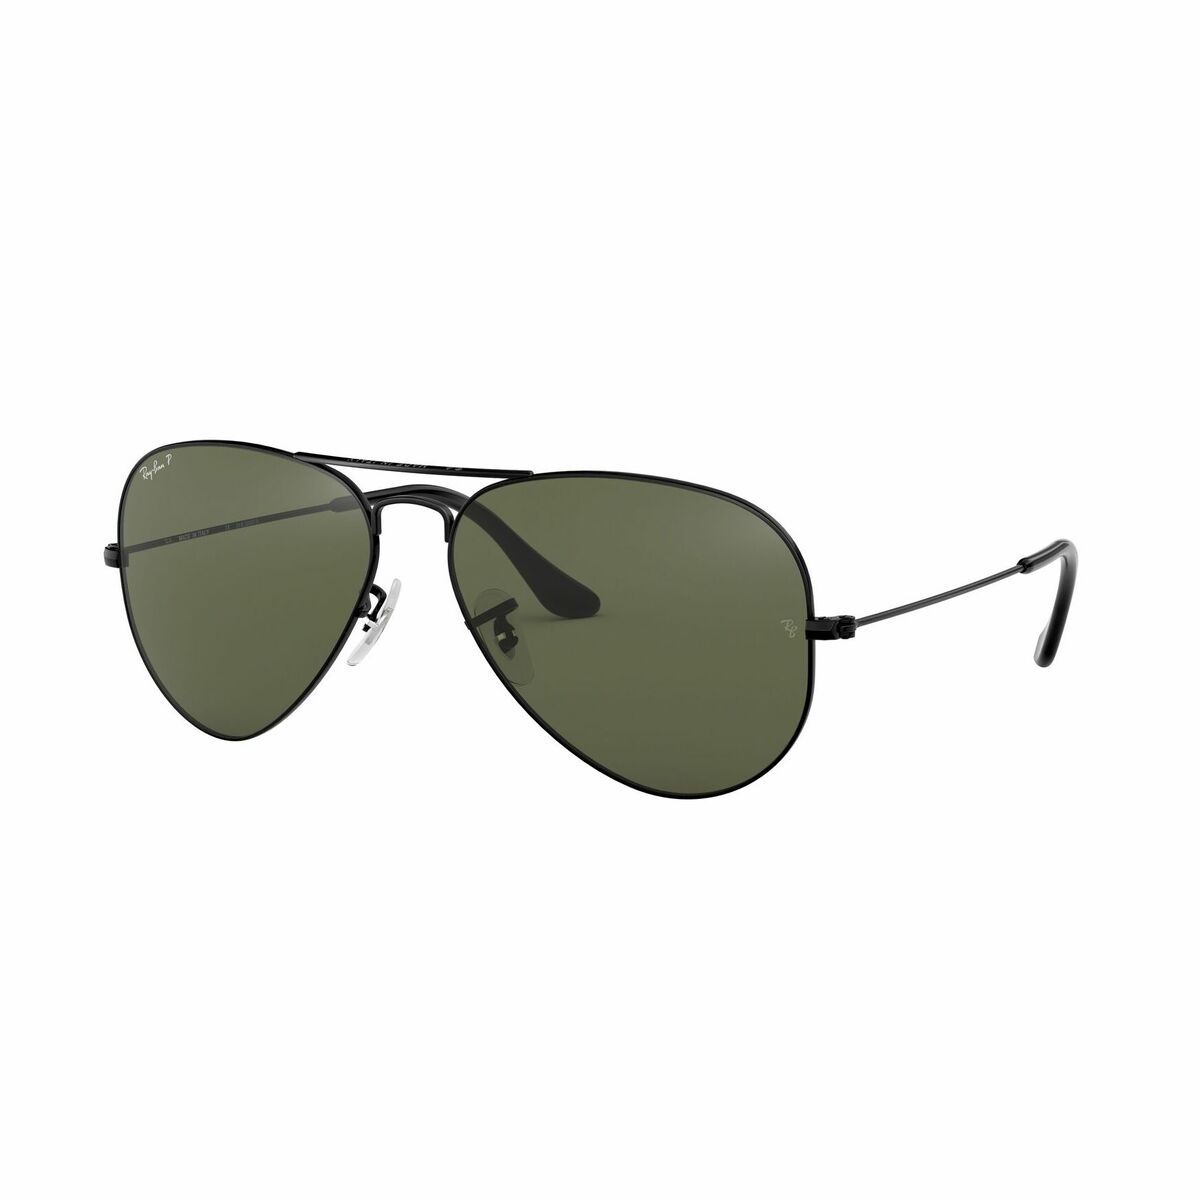 Aviator Classic Sunglasses RB3025 002 58 - Size 55